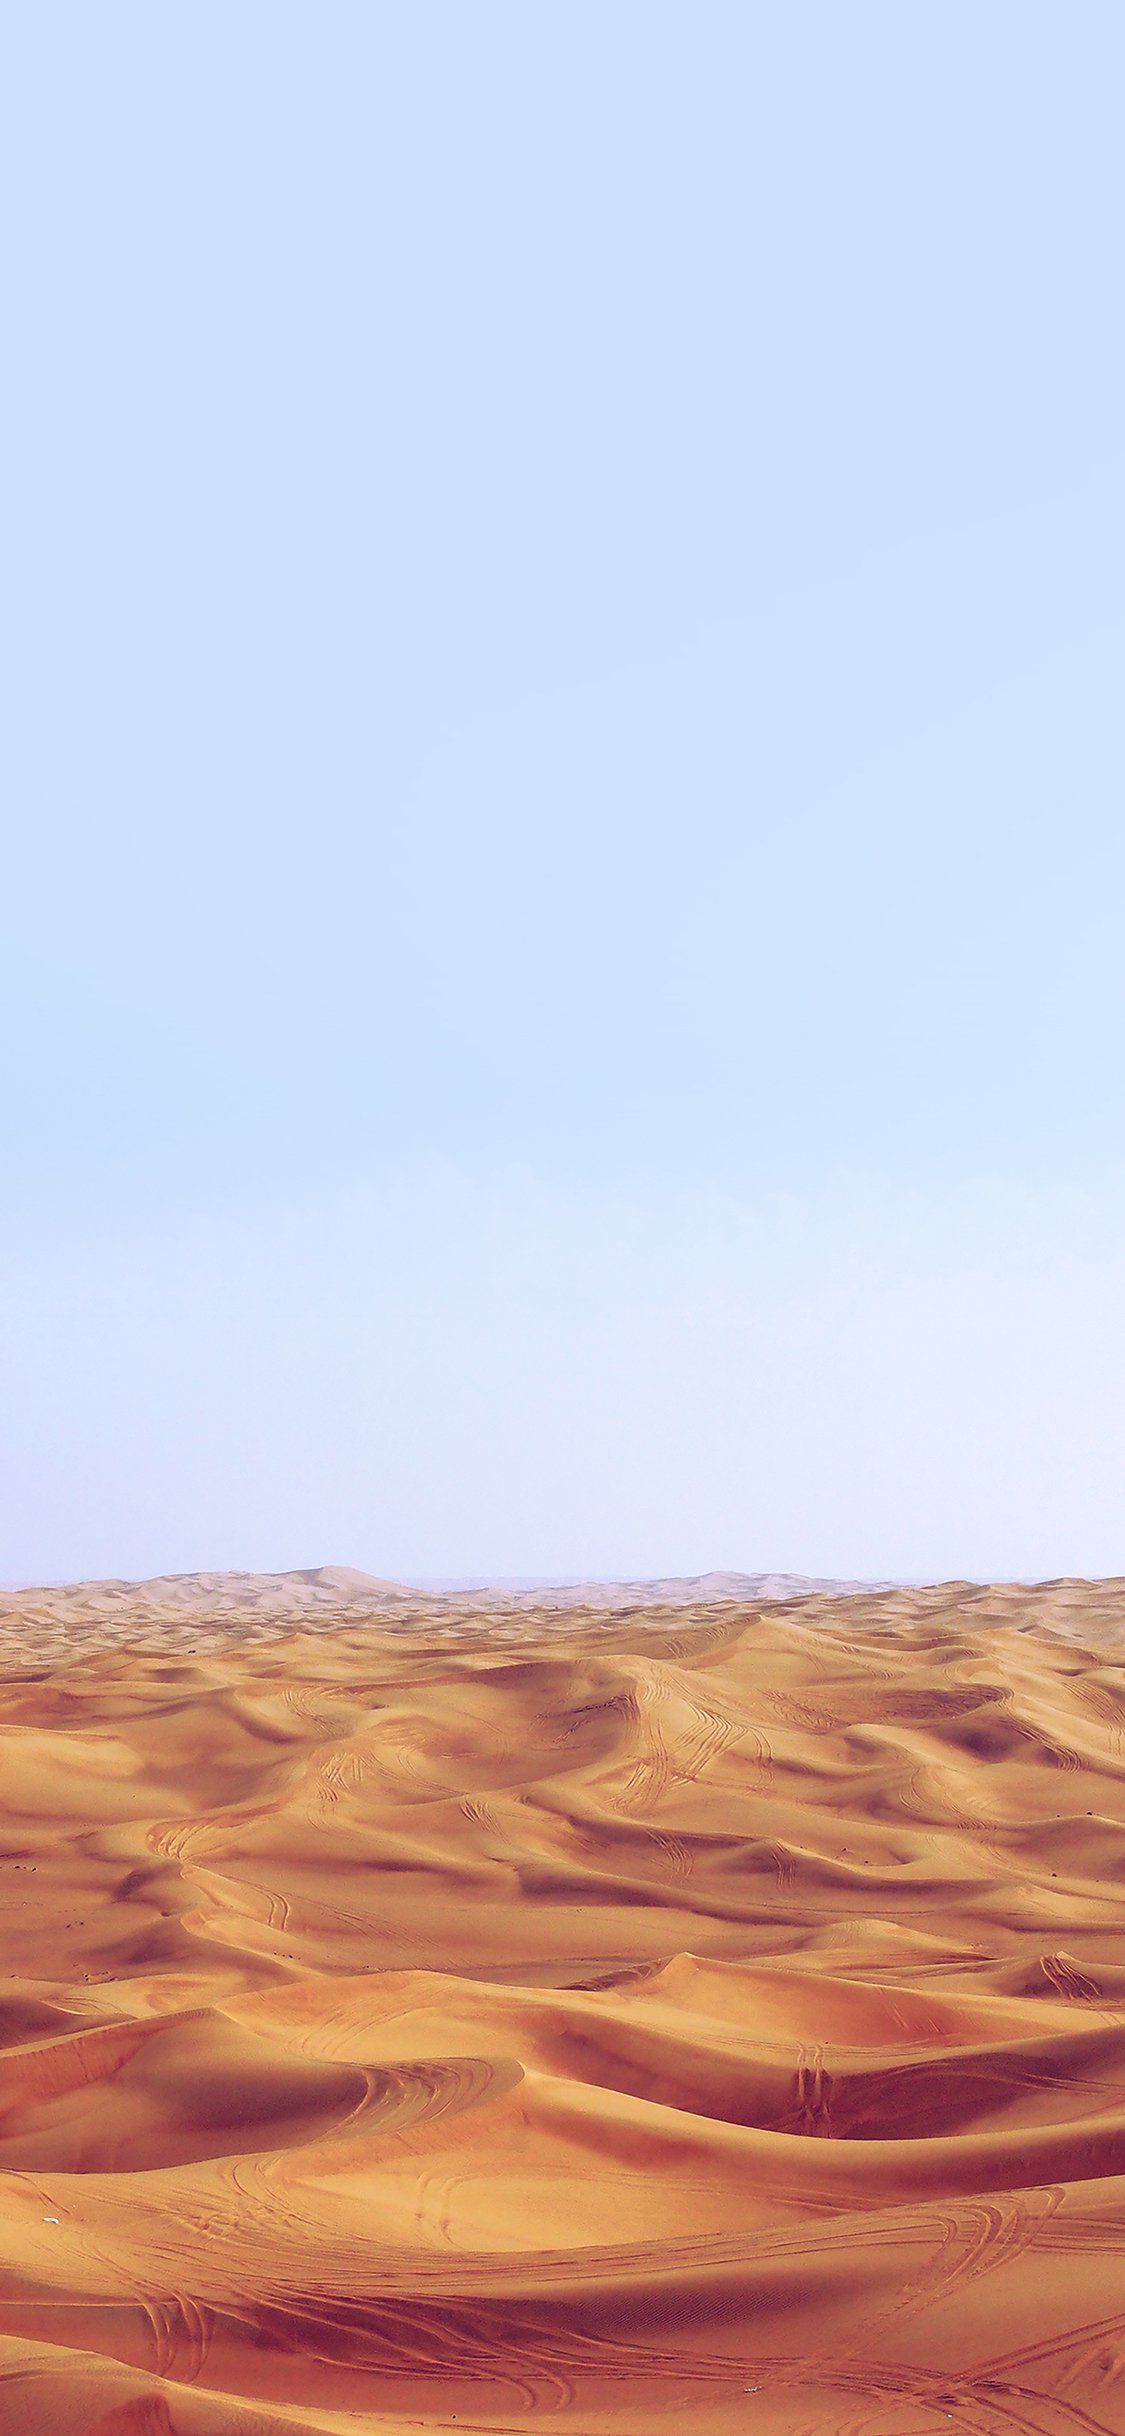 Desert minimal blue sky earth iPhone X Wallpaper Free Download